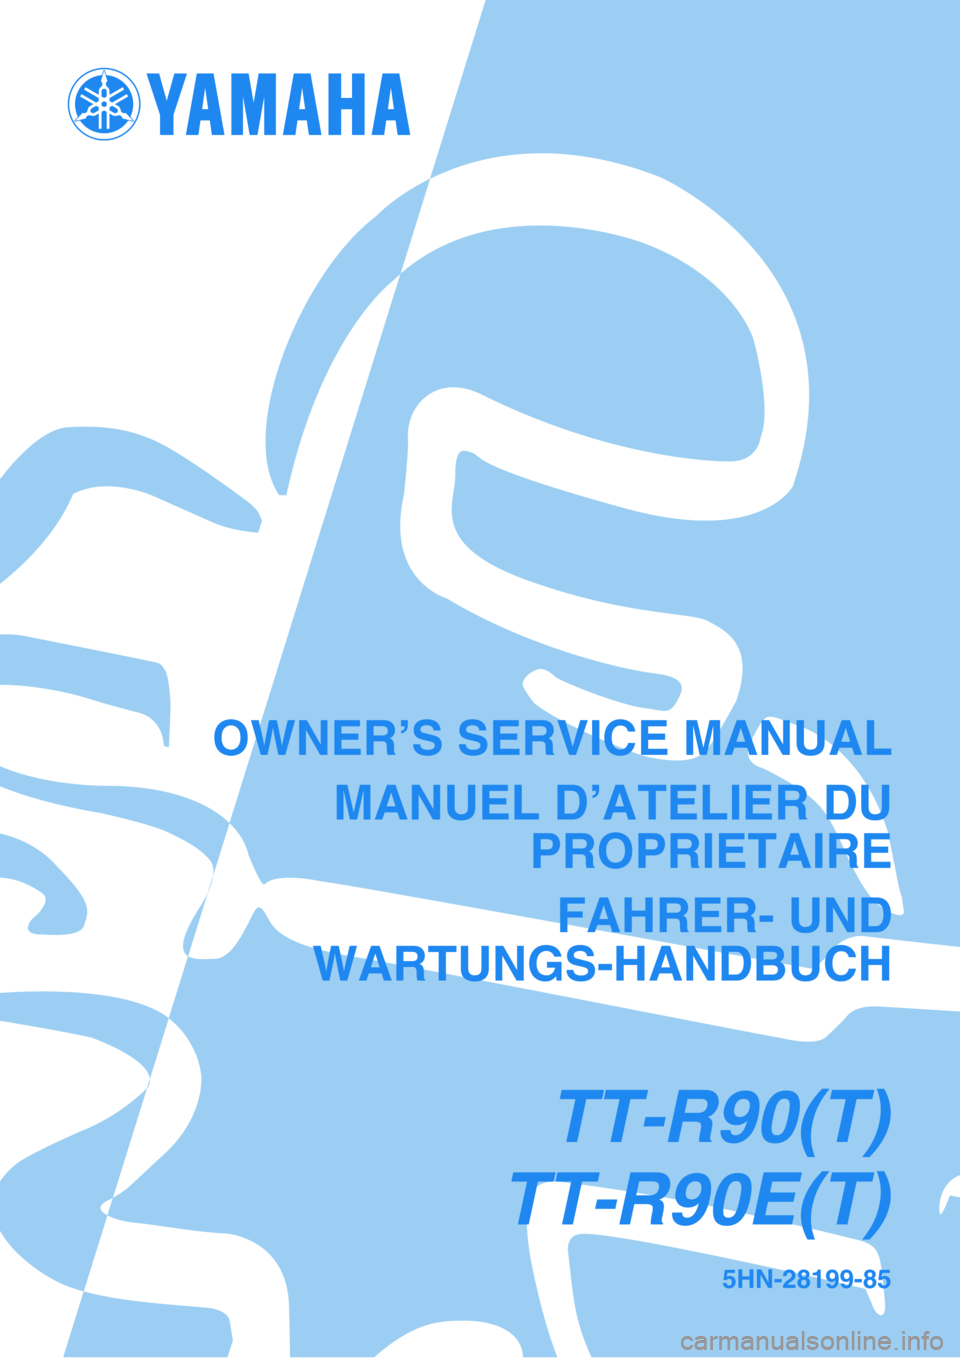 YAMAHA TTR90 2005  Notices Demploi (in French) 5HN-28199-85
TT-R90(T)
TT-R90E(T)
OWNER’S SERVICE MANUAL
MANUEL D’ATELIER DU
PROPRIETAIRE
FAHRER- UND
WARTUNGS-HANDBUCH 